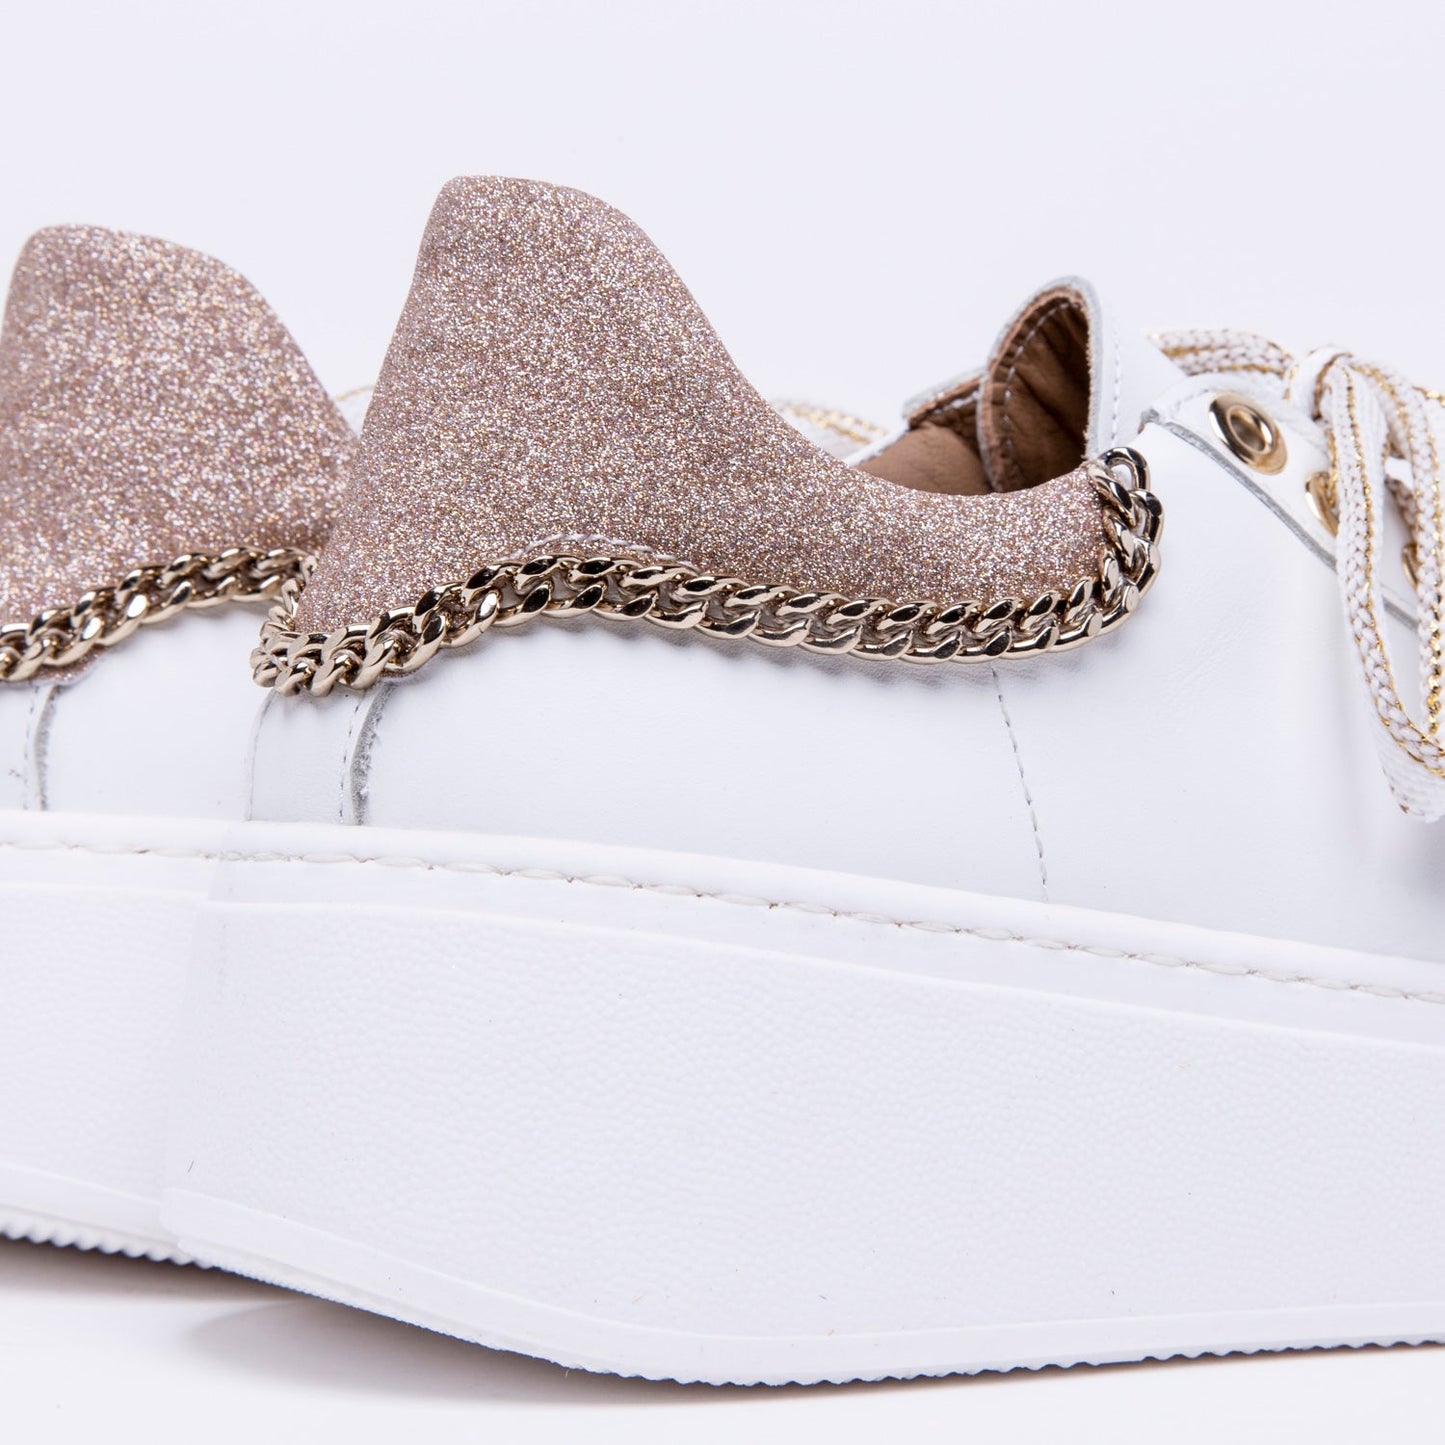 Sneakers in nappa bianca e glitter. - TreemmeCreazioni